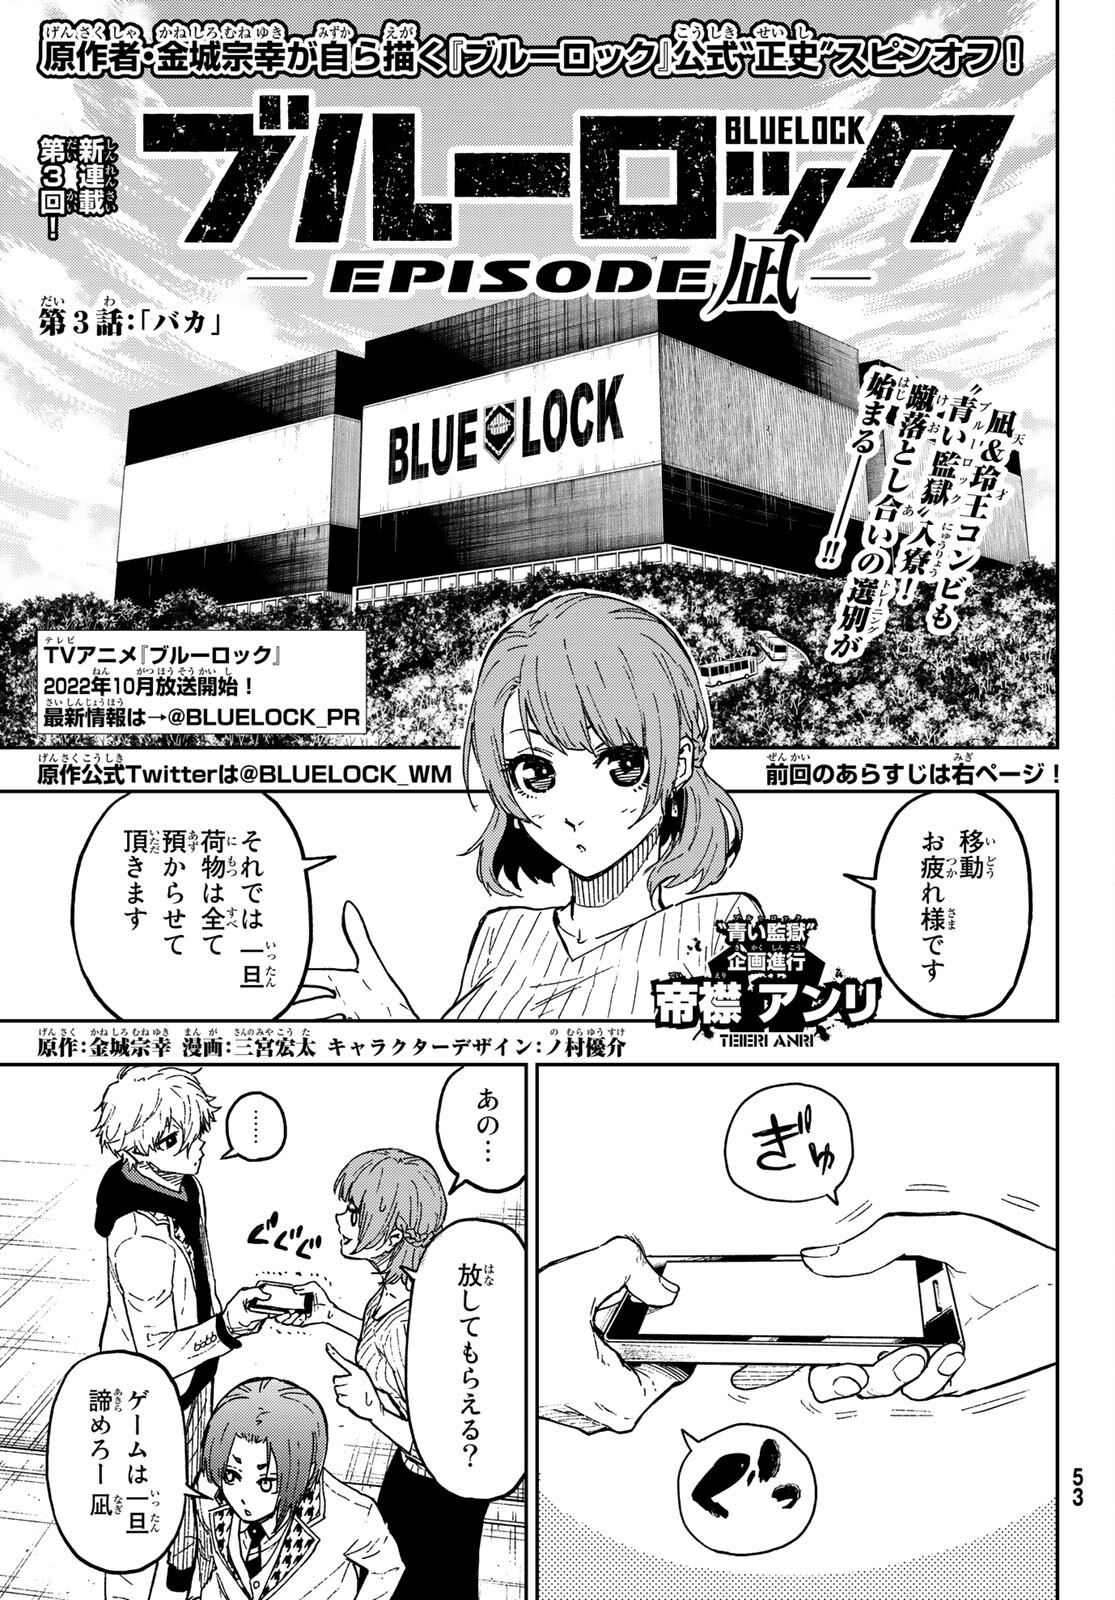 Chapter 1 (Episode Nagi), Blue Lock Wiki